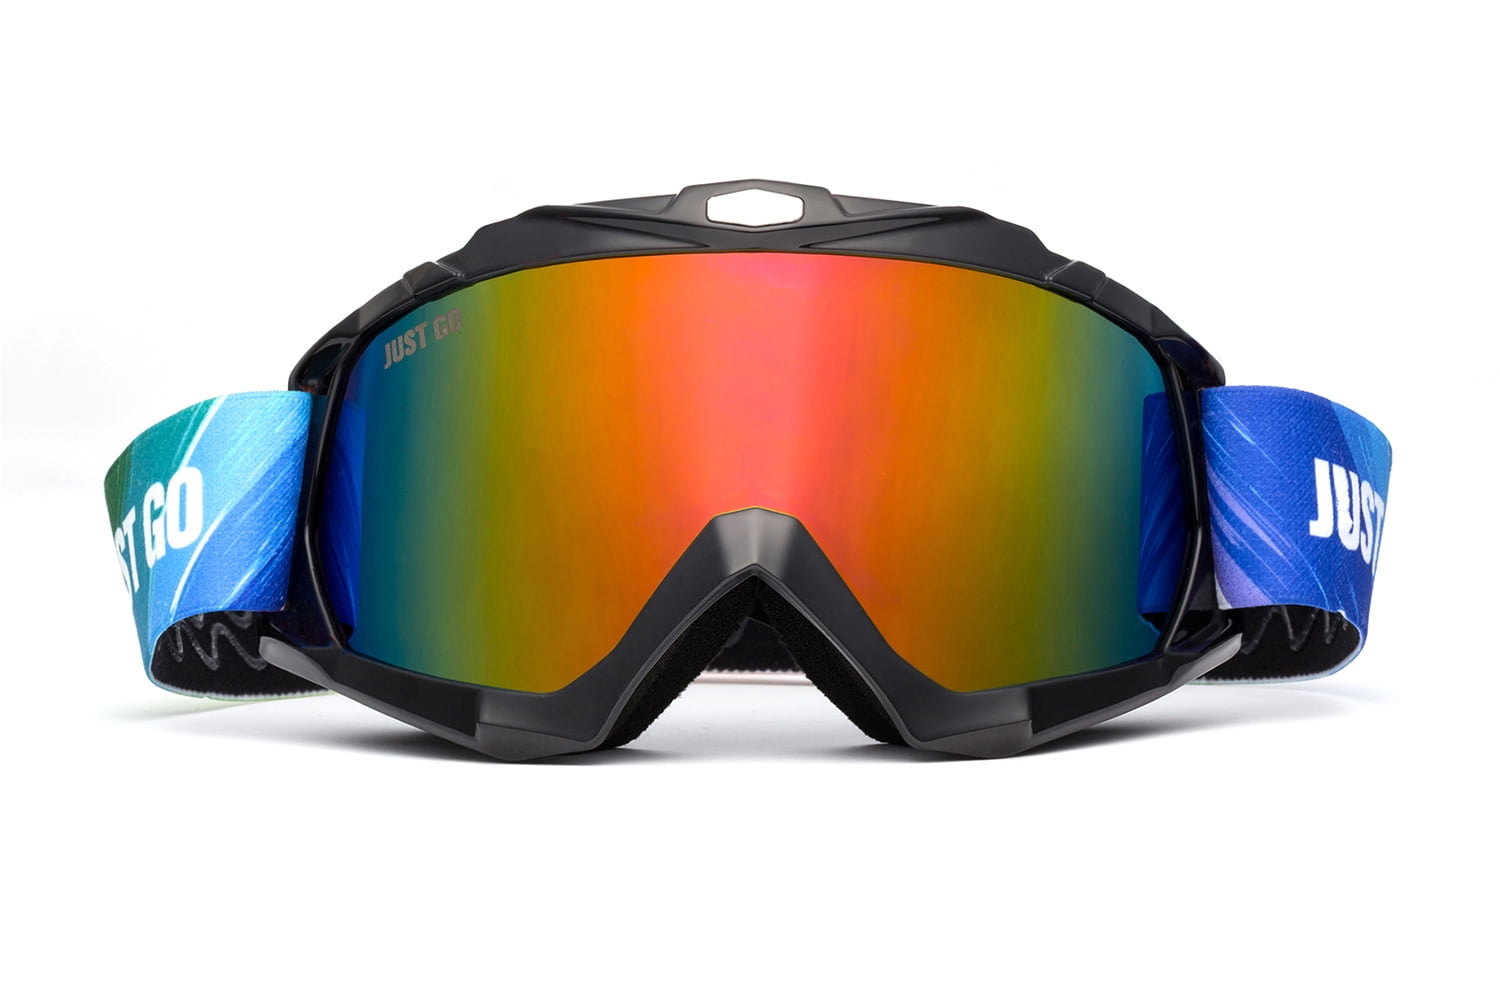 Mens Snow Ski Goggles "Gorilla" Anti-Fog Dual Lens UV400 Snowboarding w Pouch 